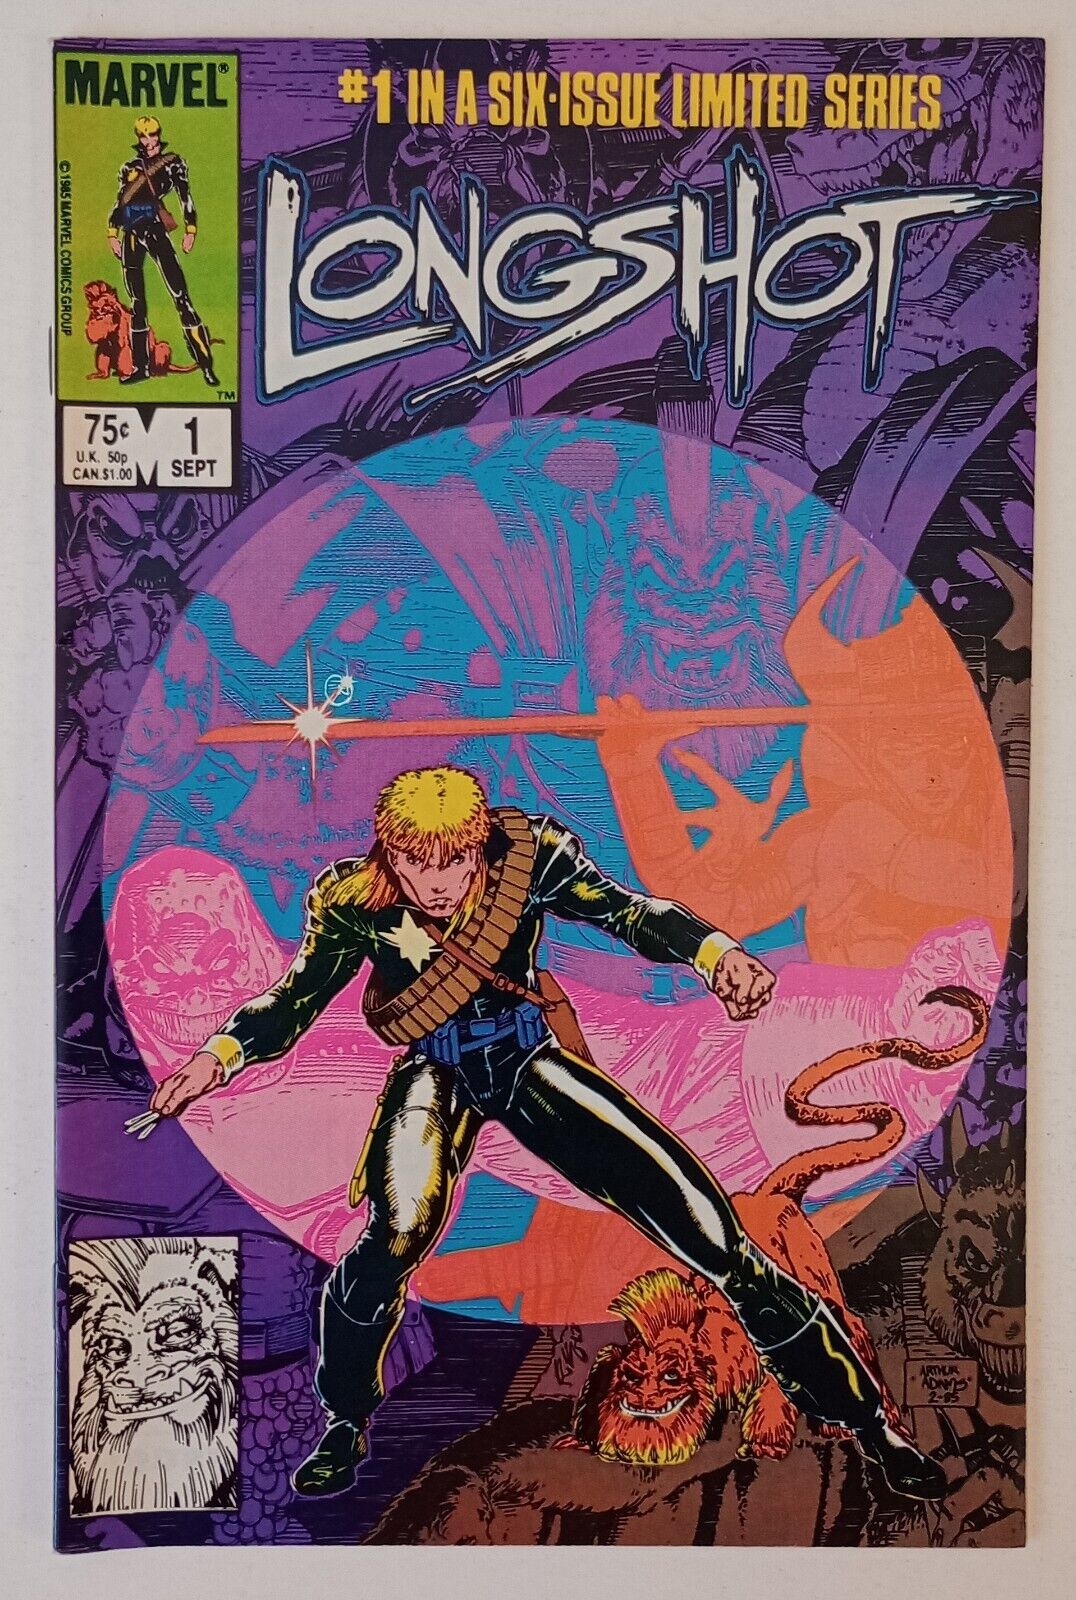 Longshot#1 (1st appearance of Longshot & Spiral) 1985